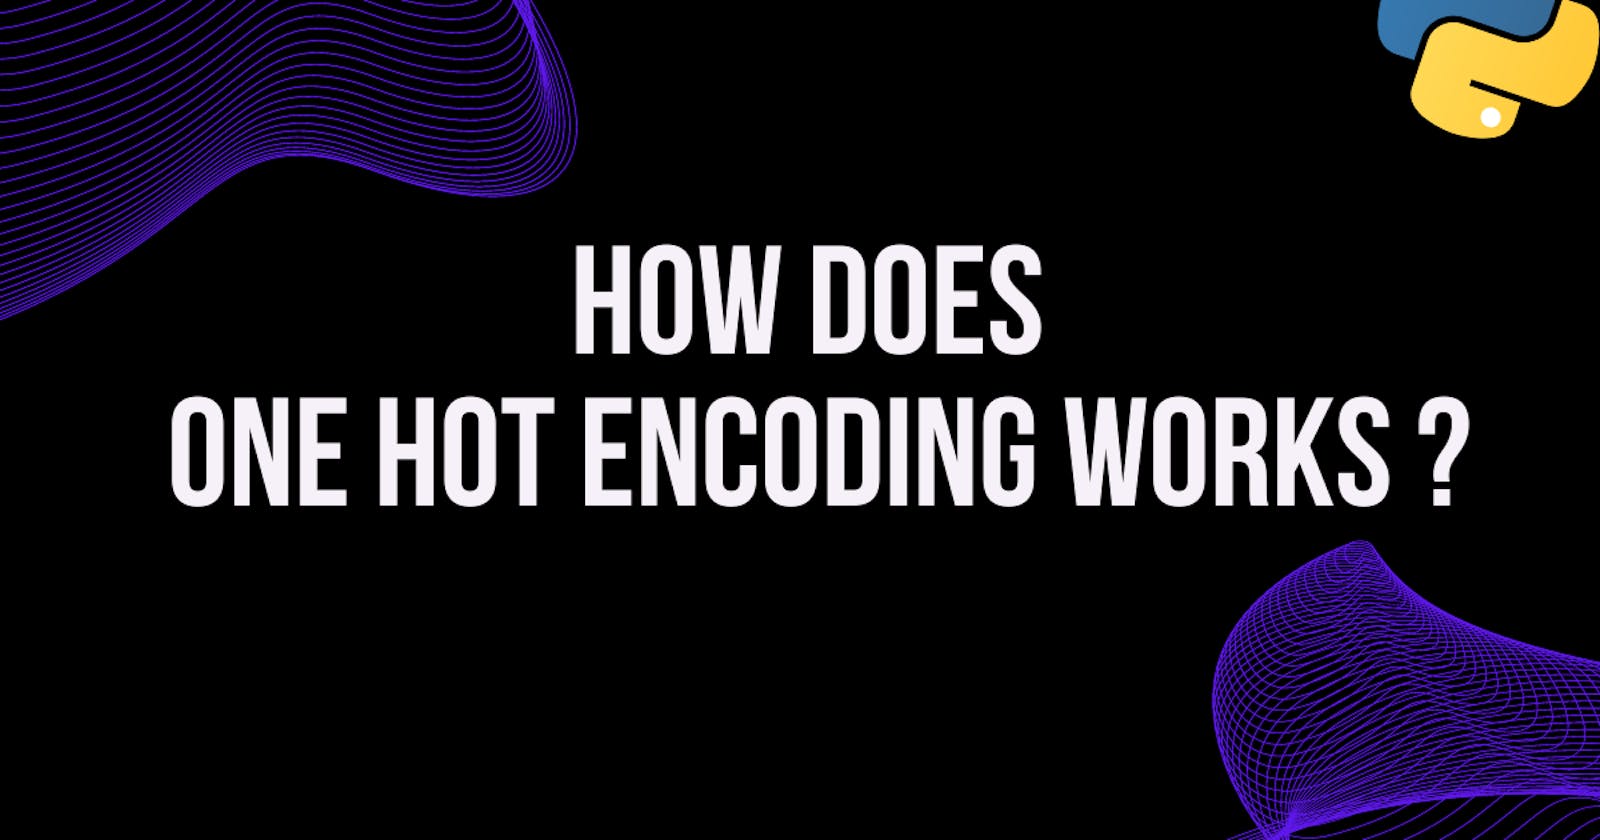 One hot encoding technique